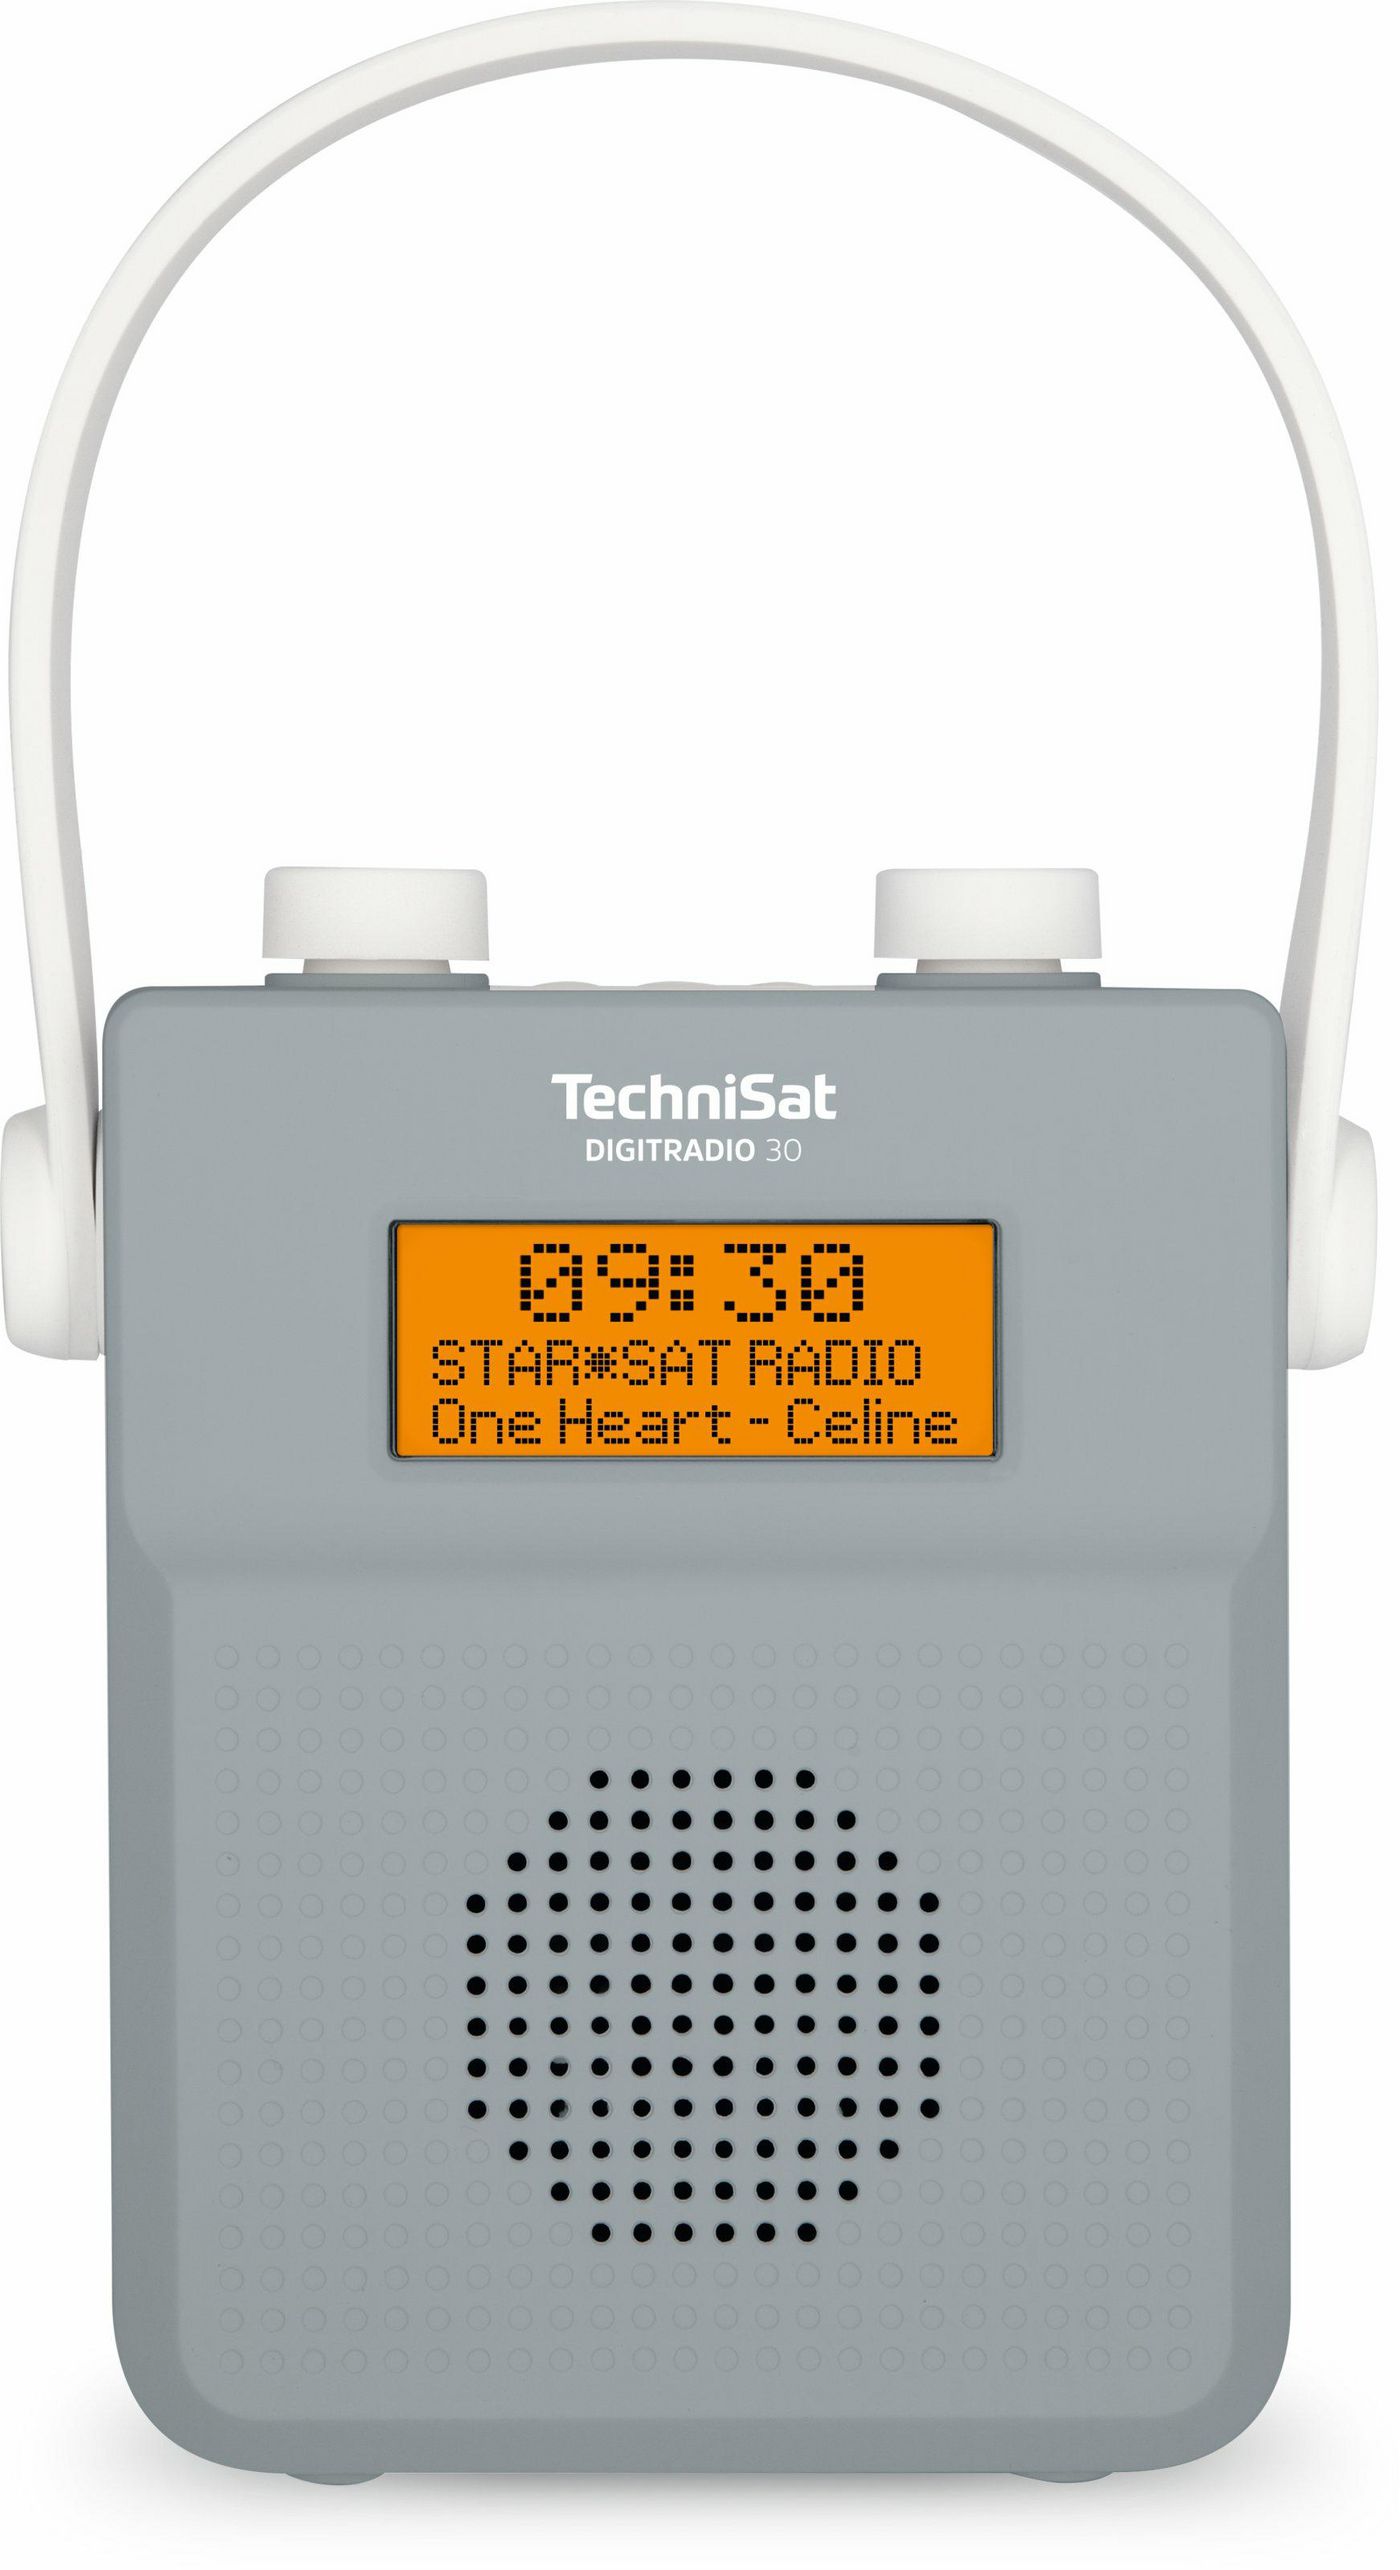 Technisat 00003955 W128262579 Digitradio 30 Portable 